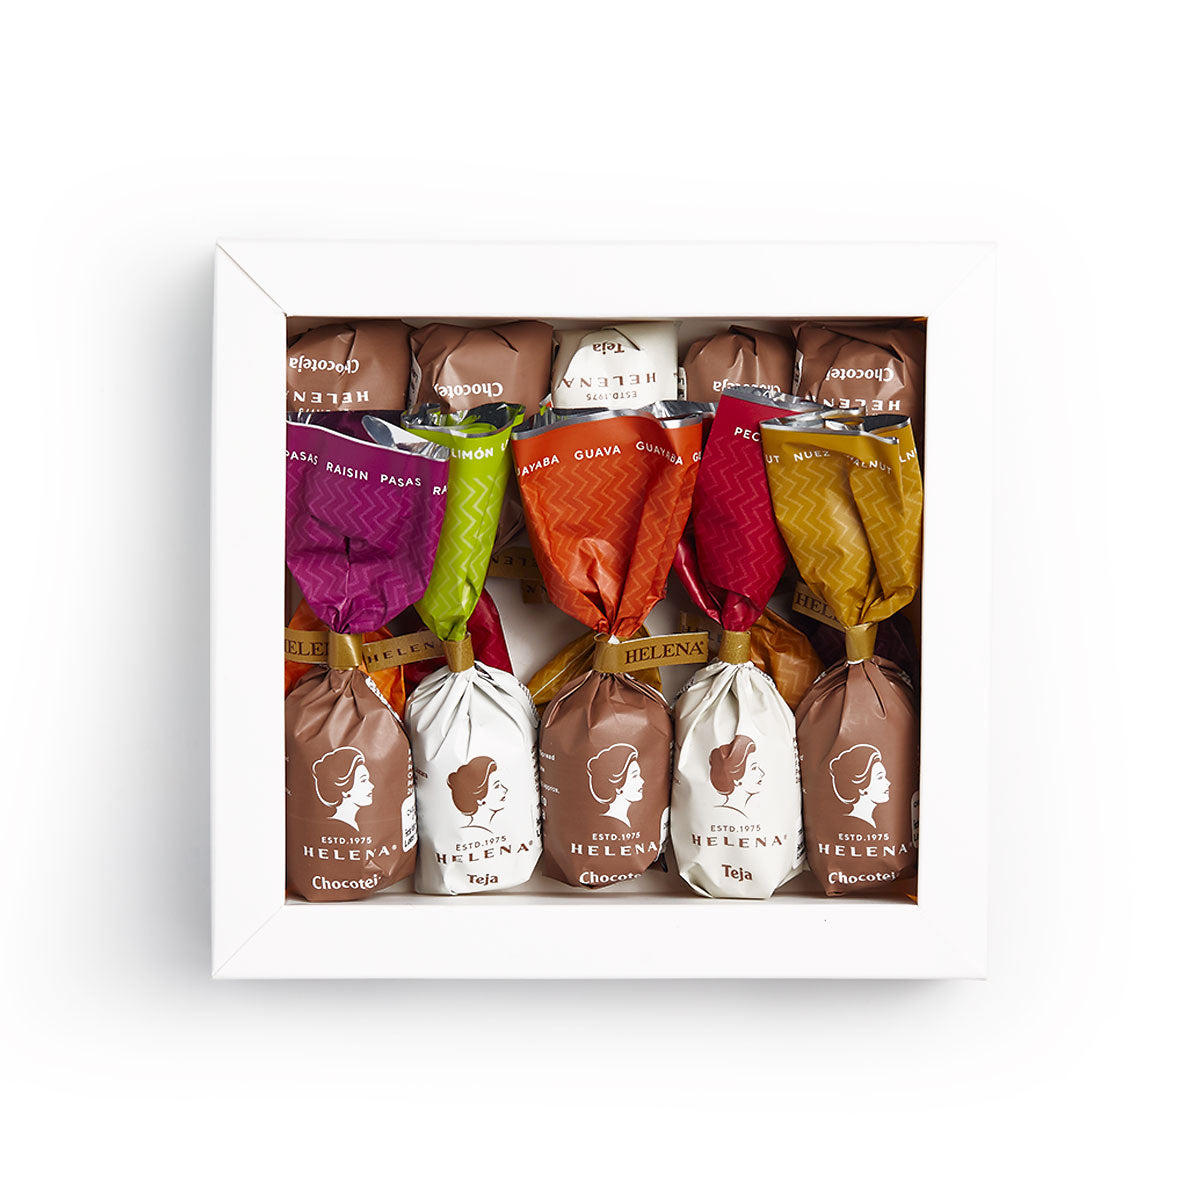 Madame Helena Red Assorted Chocolate & Fondant Caramel: 10-Pack, 10oz | 45% Cacao, Gluten-Free